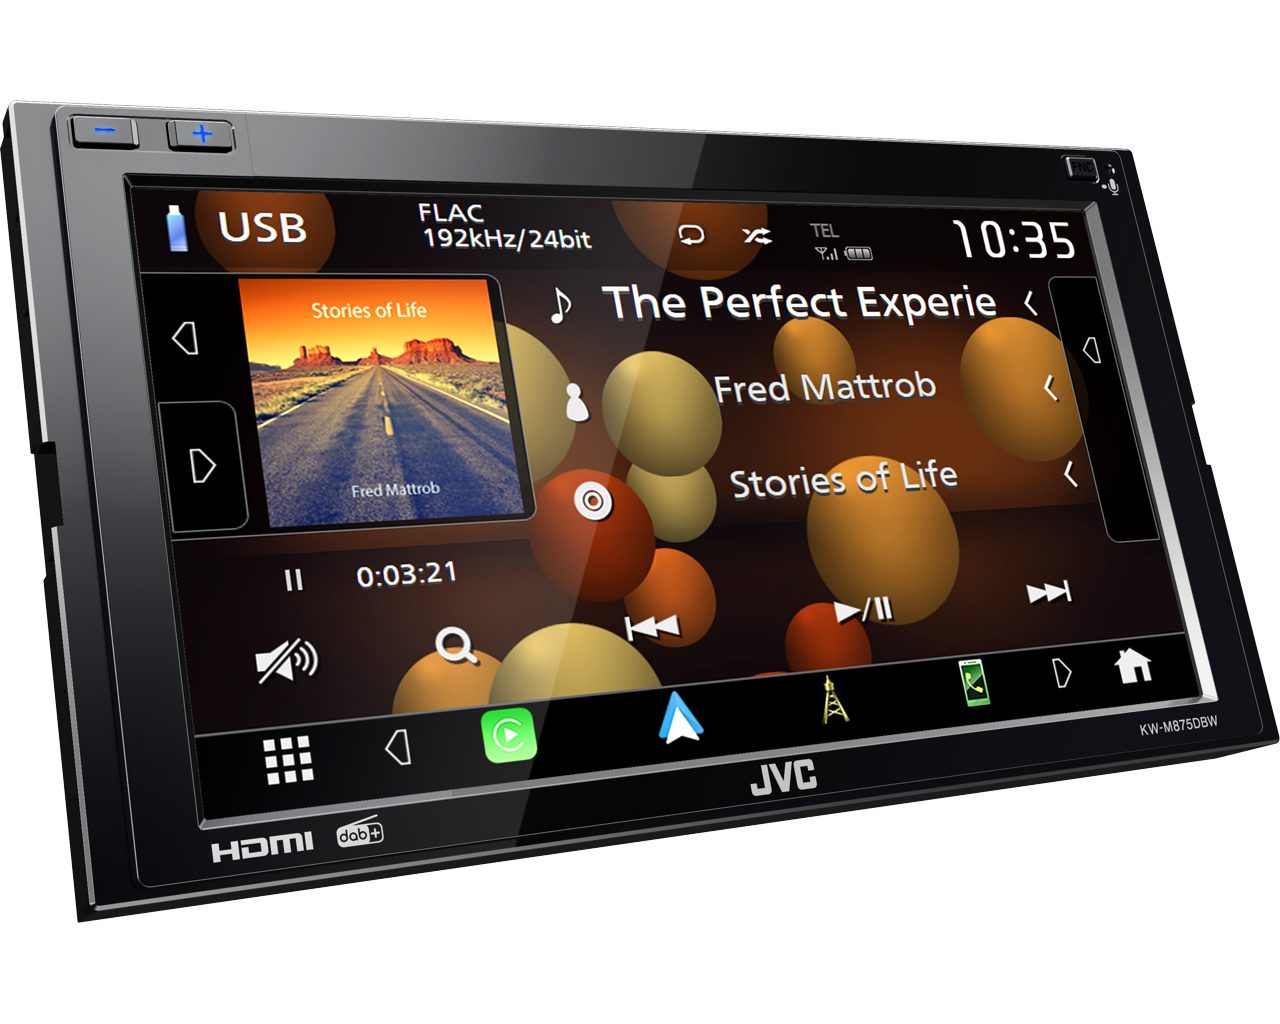 Apple Bluetoaoth JVC CarPlay KW-M875DBW Autoradio DAB+ Android-Auto